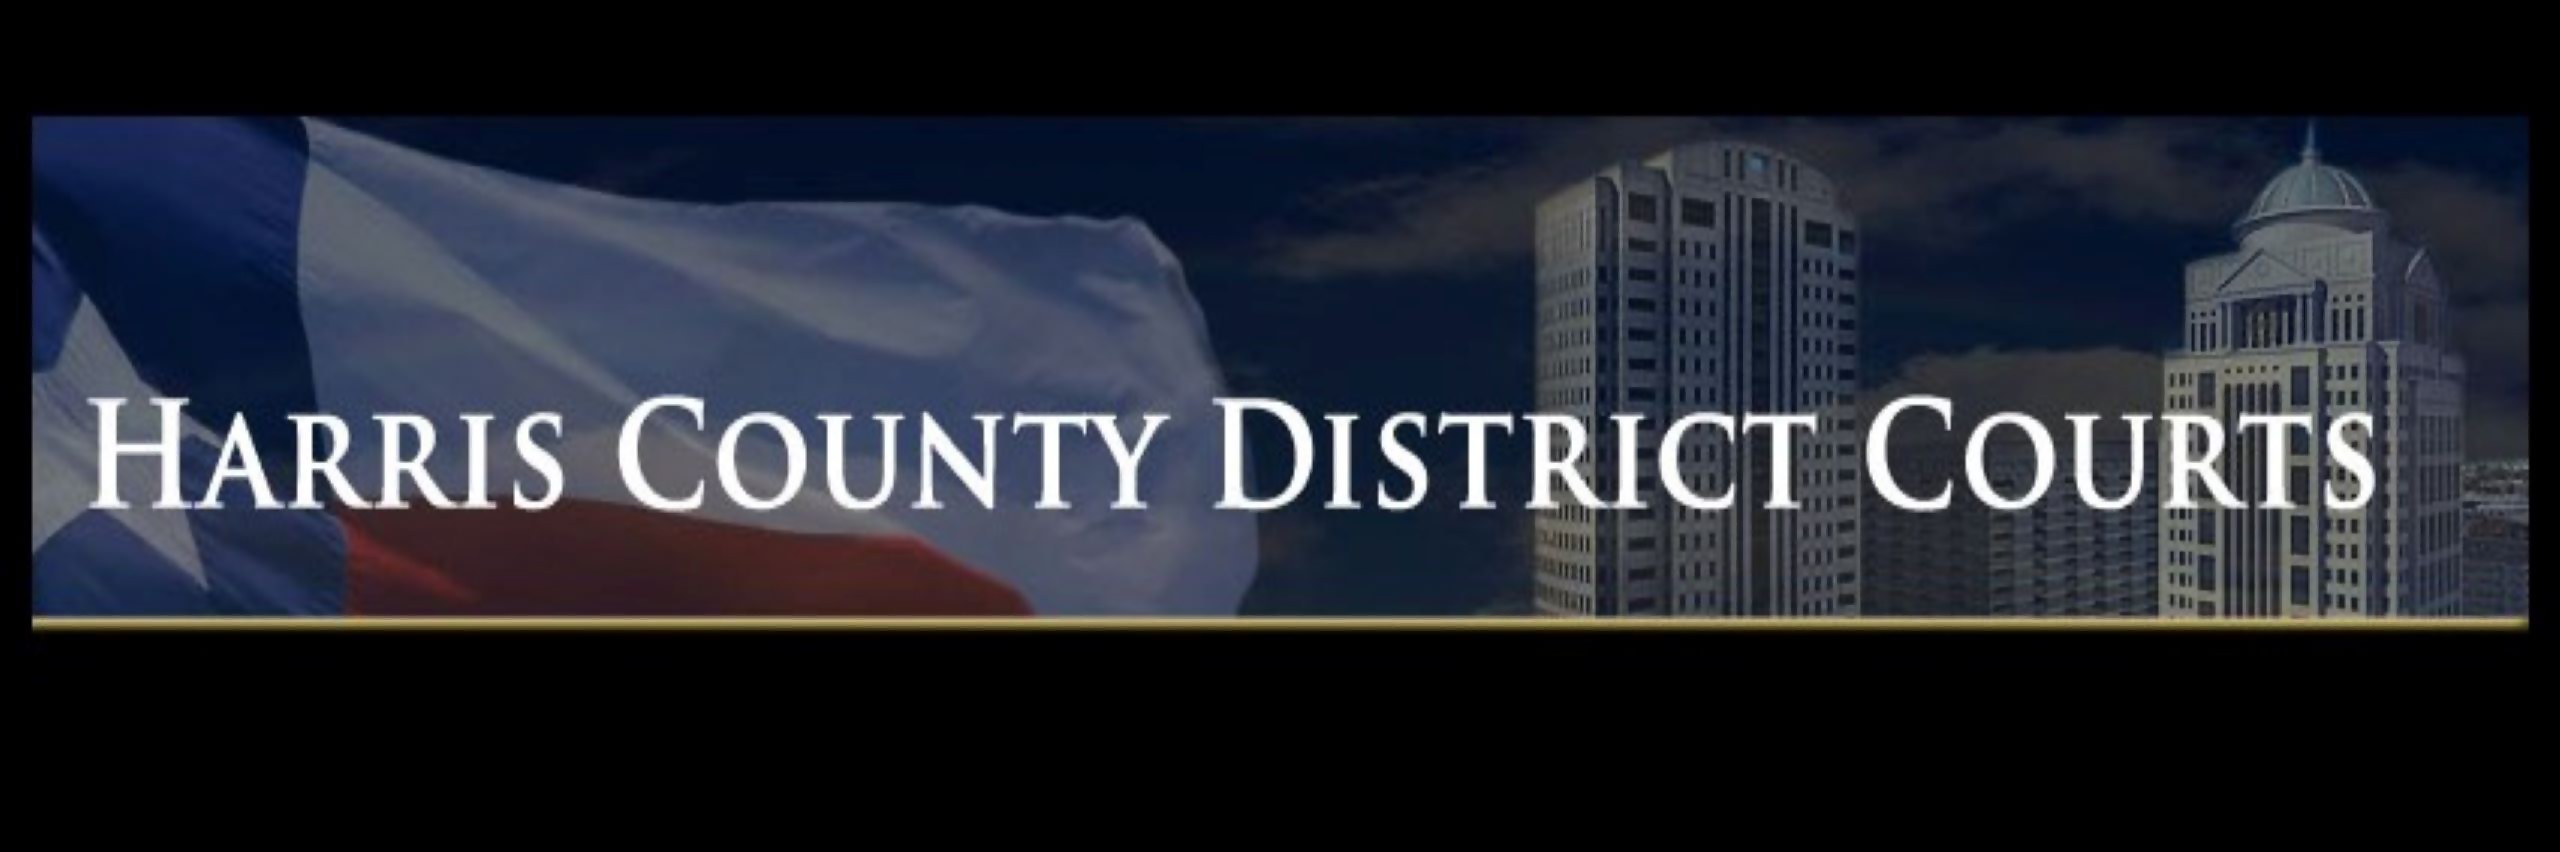 269th District Court - Live Stream